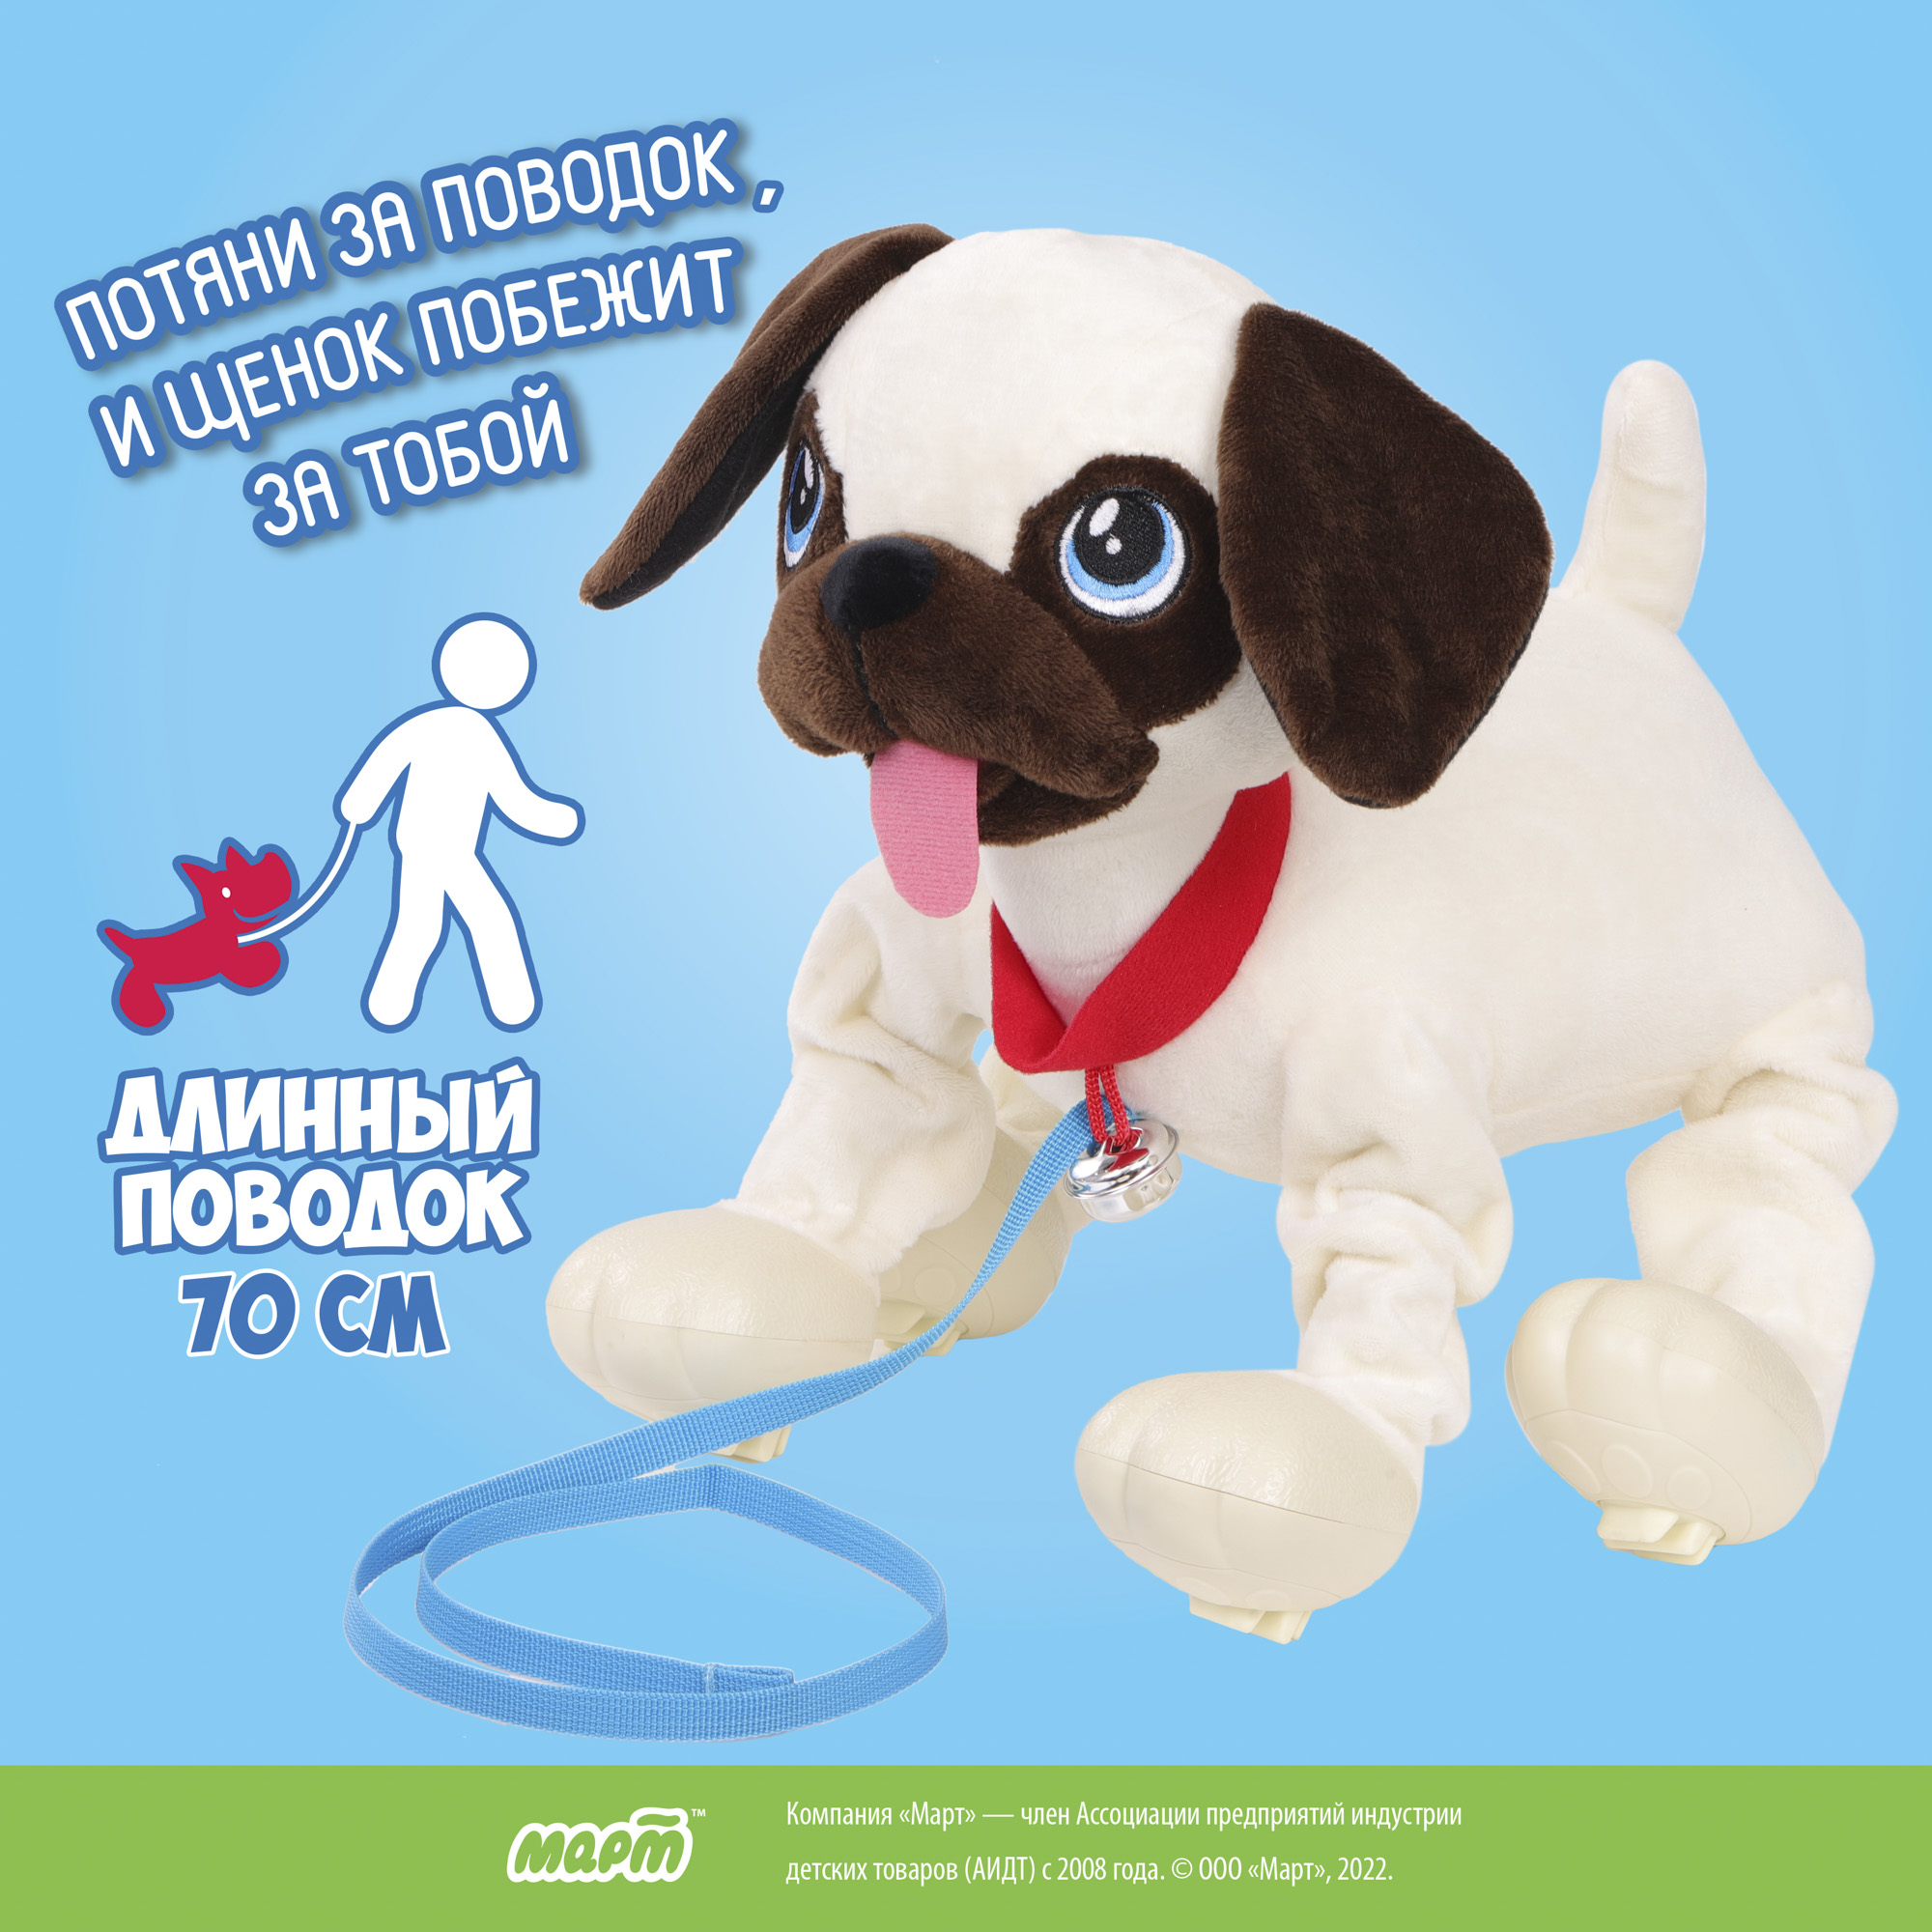 Интерактивная игрушка Собачка-Шагачка собачка на поводке Мопс - фото 10